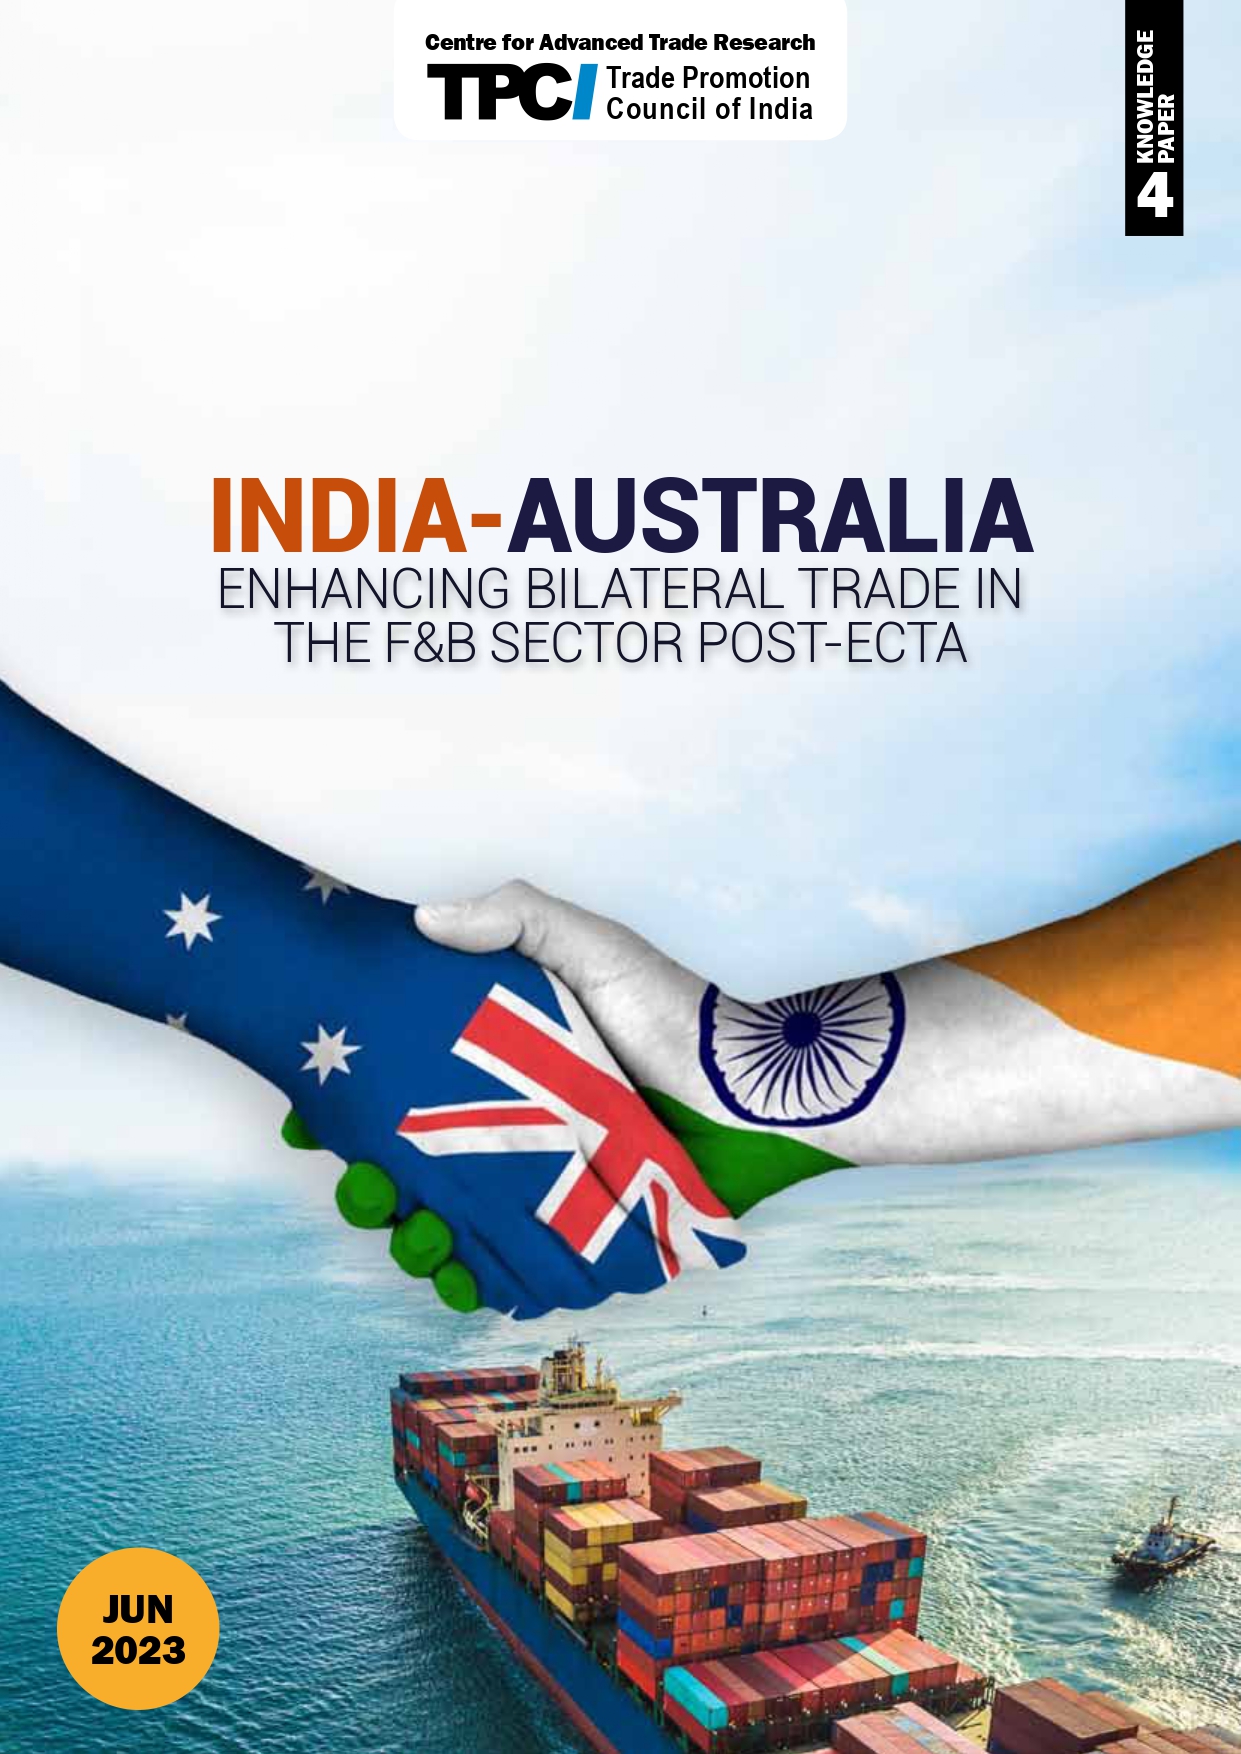 India-Australia F&B Trade post-ECTA